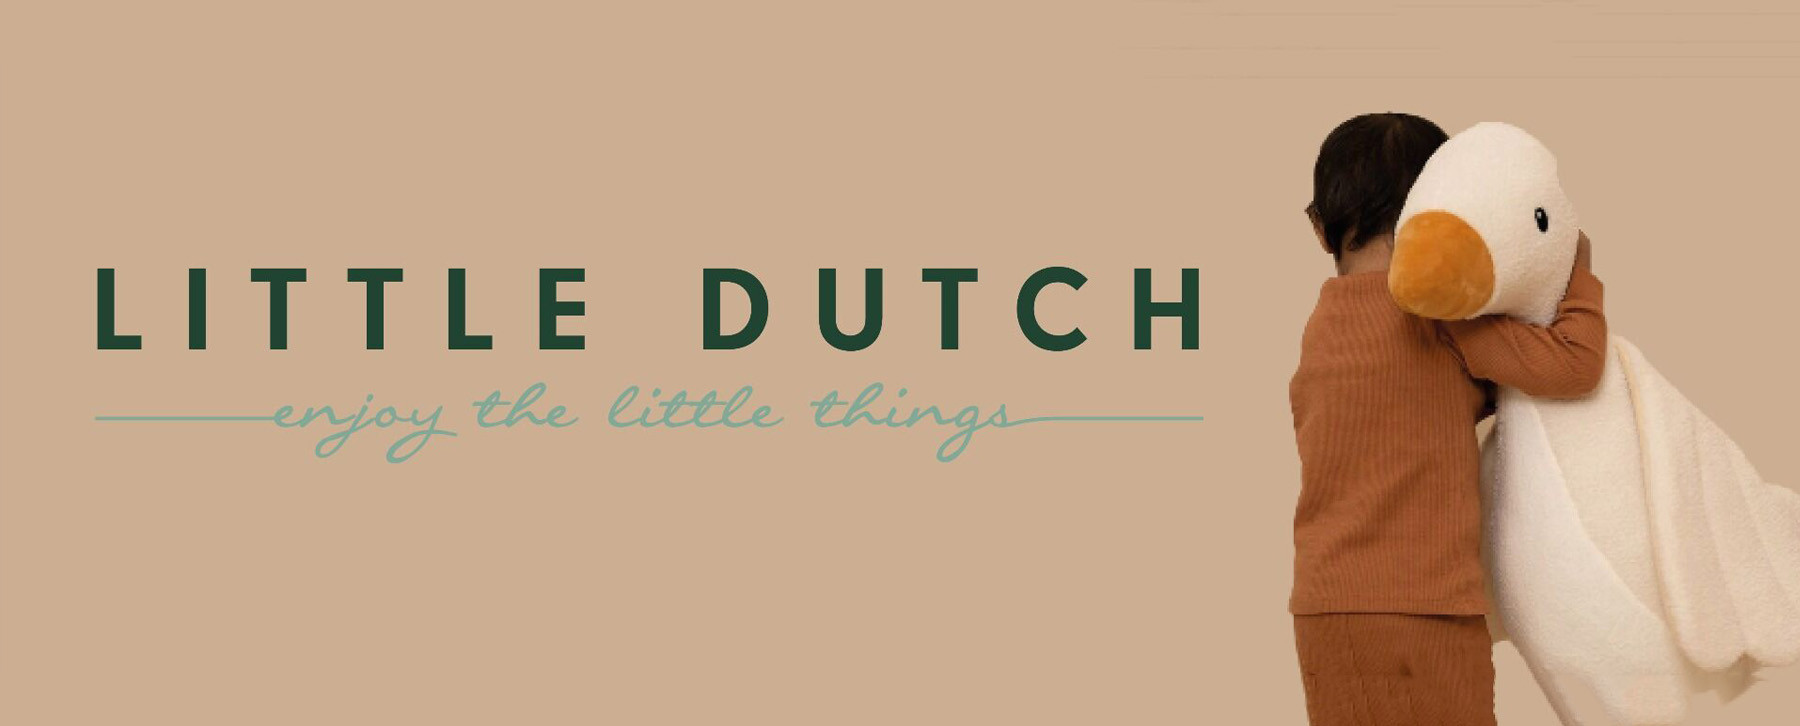 Little Dutch - enjoy the little things